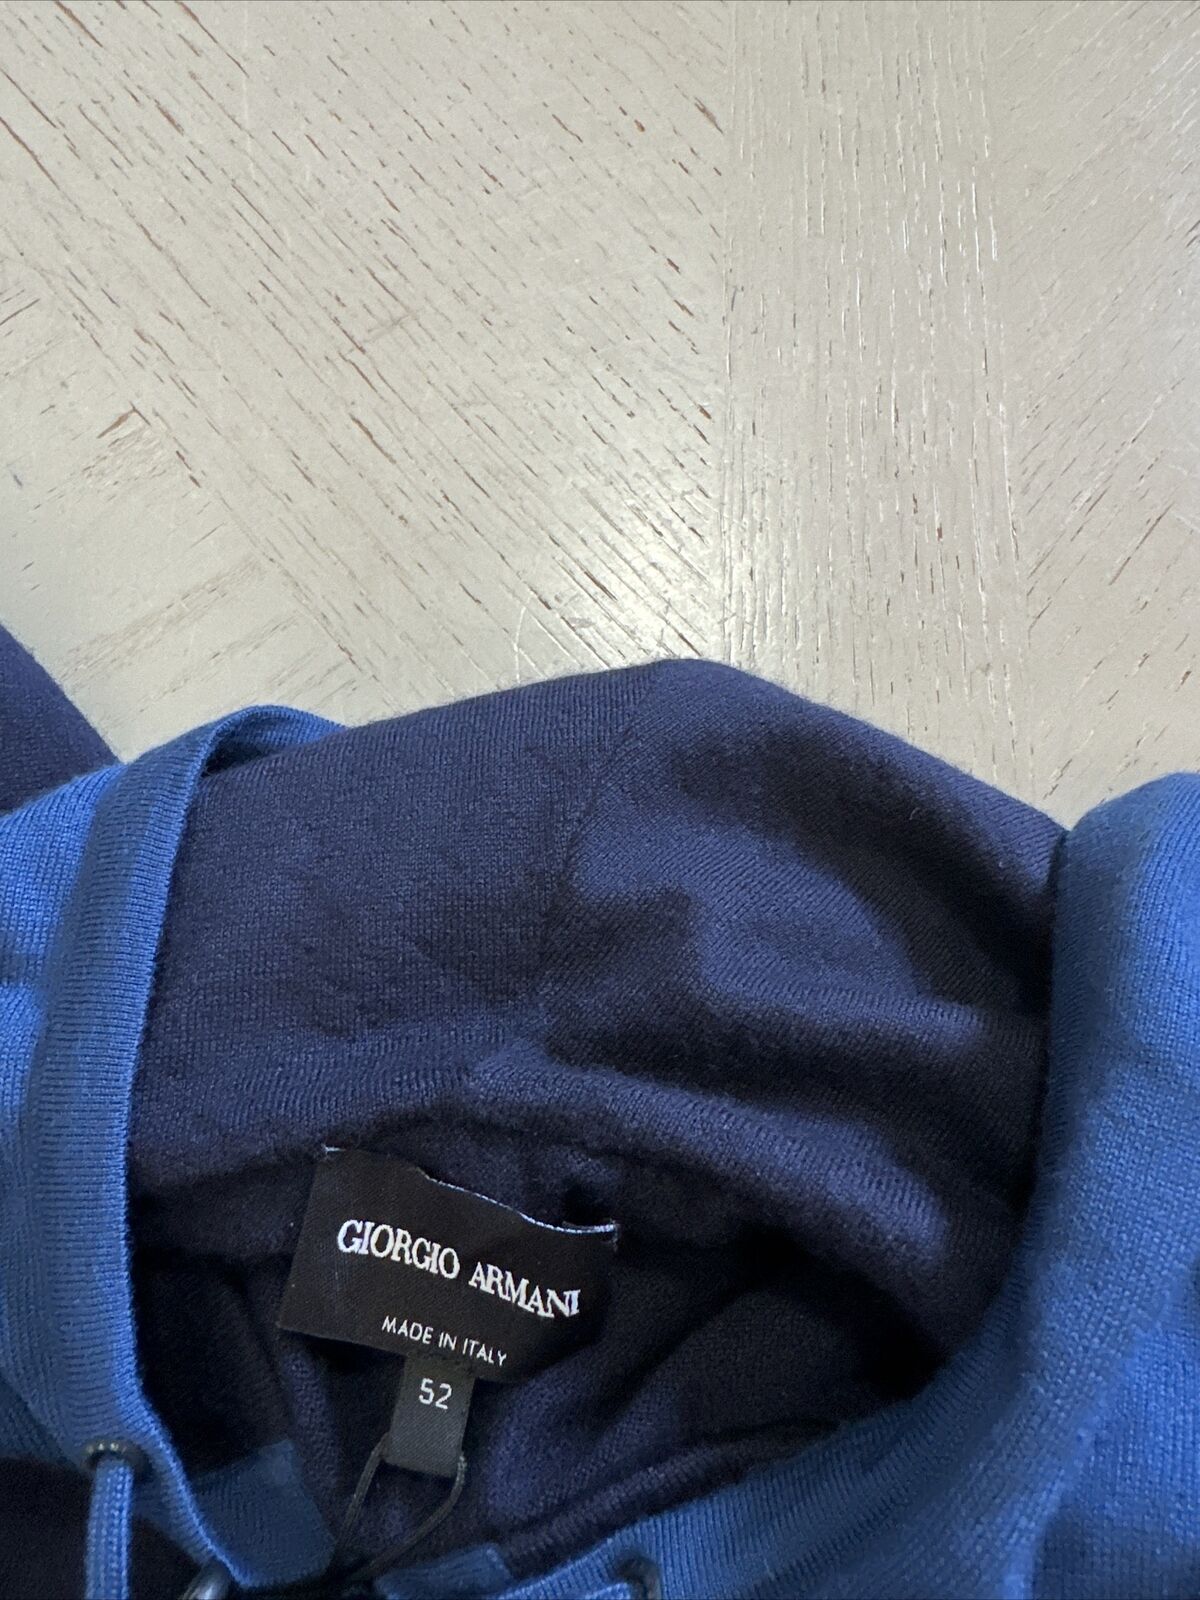 New $2095 Giorgio Armani Men’s hooded Sweater Navy/Blue/Purple 52 US ( L ) Ita